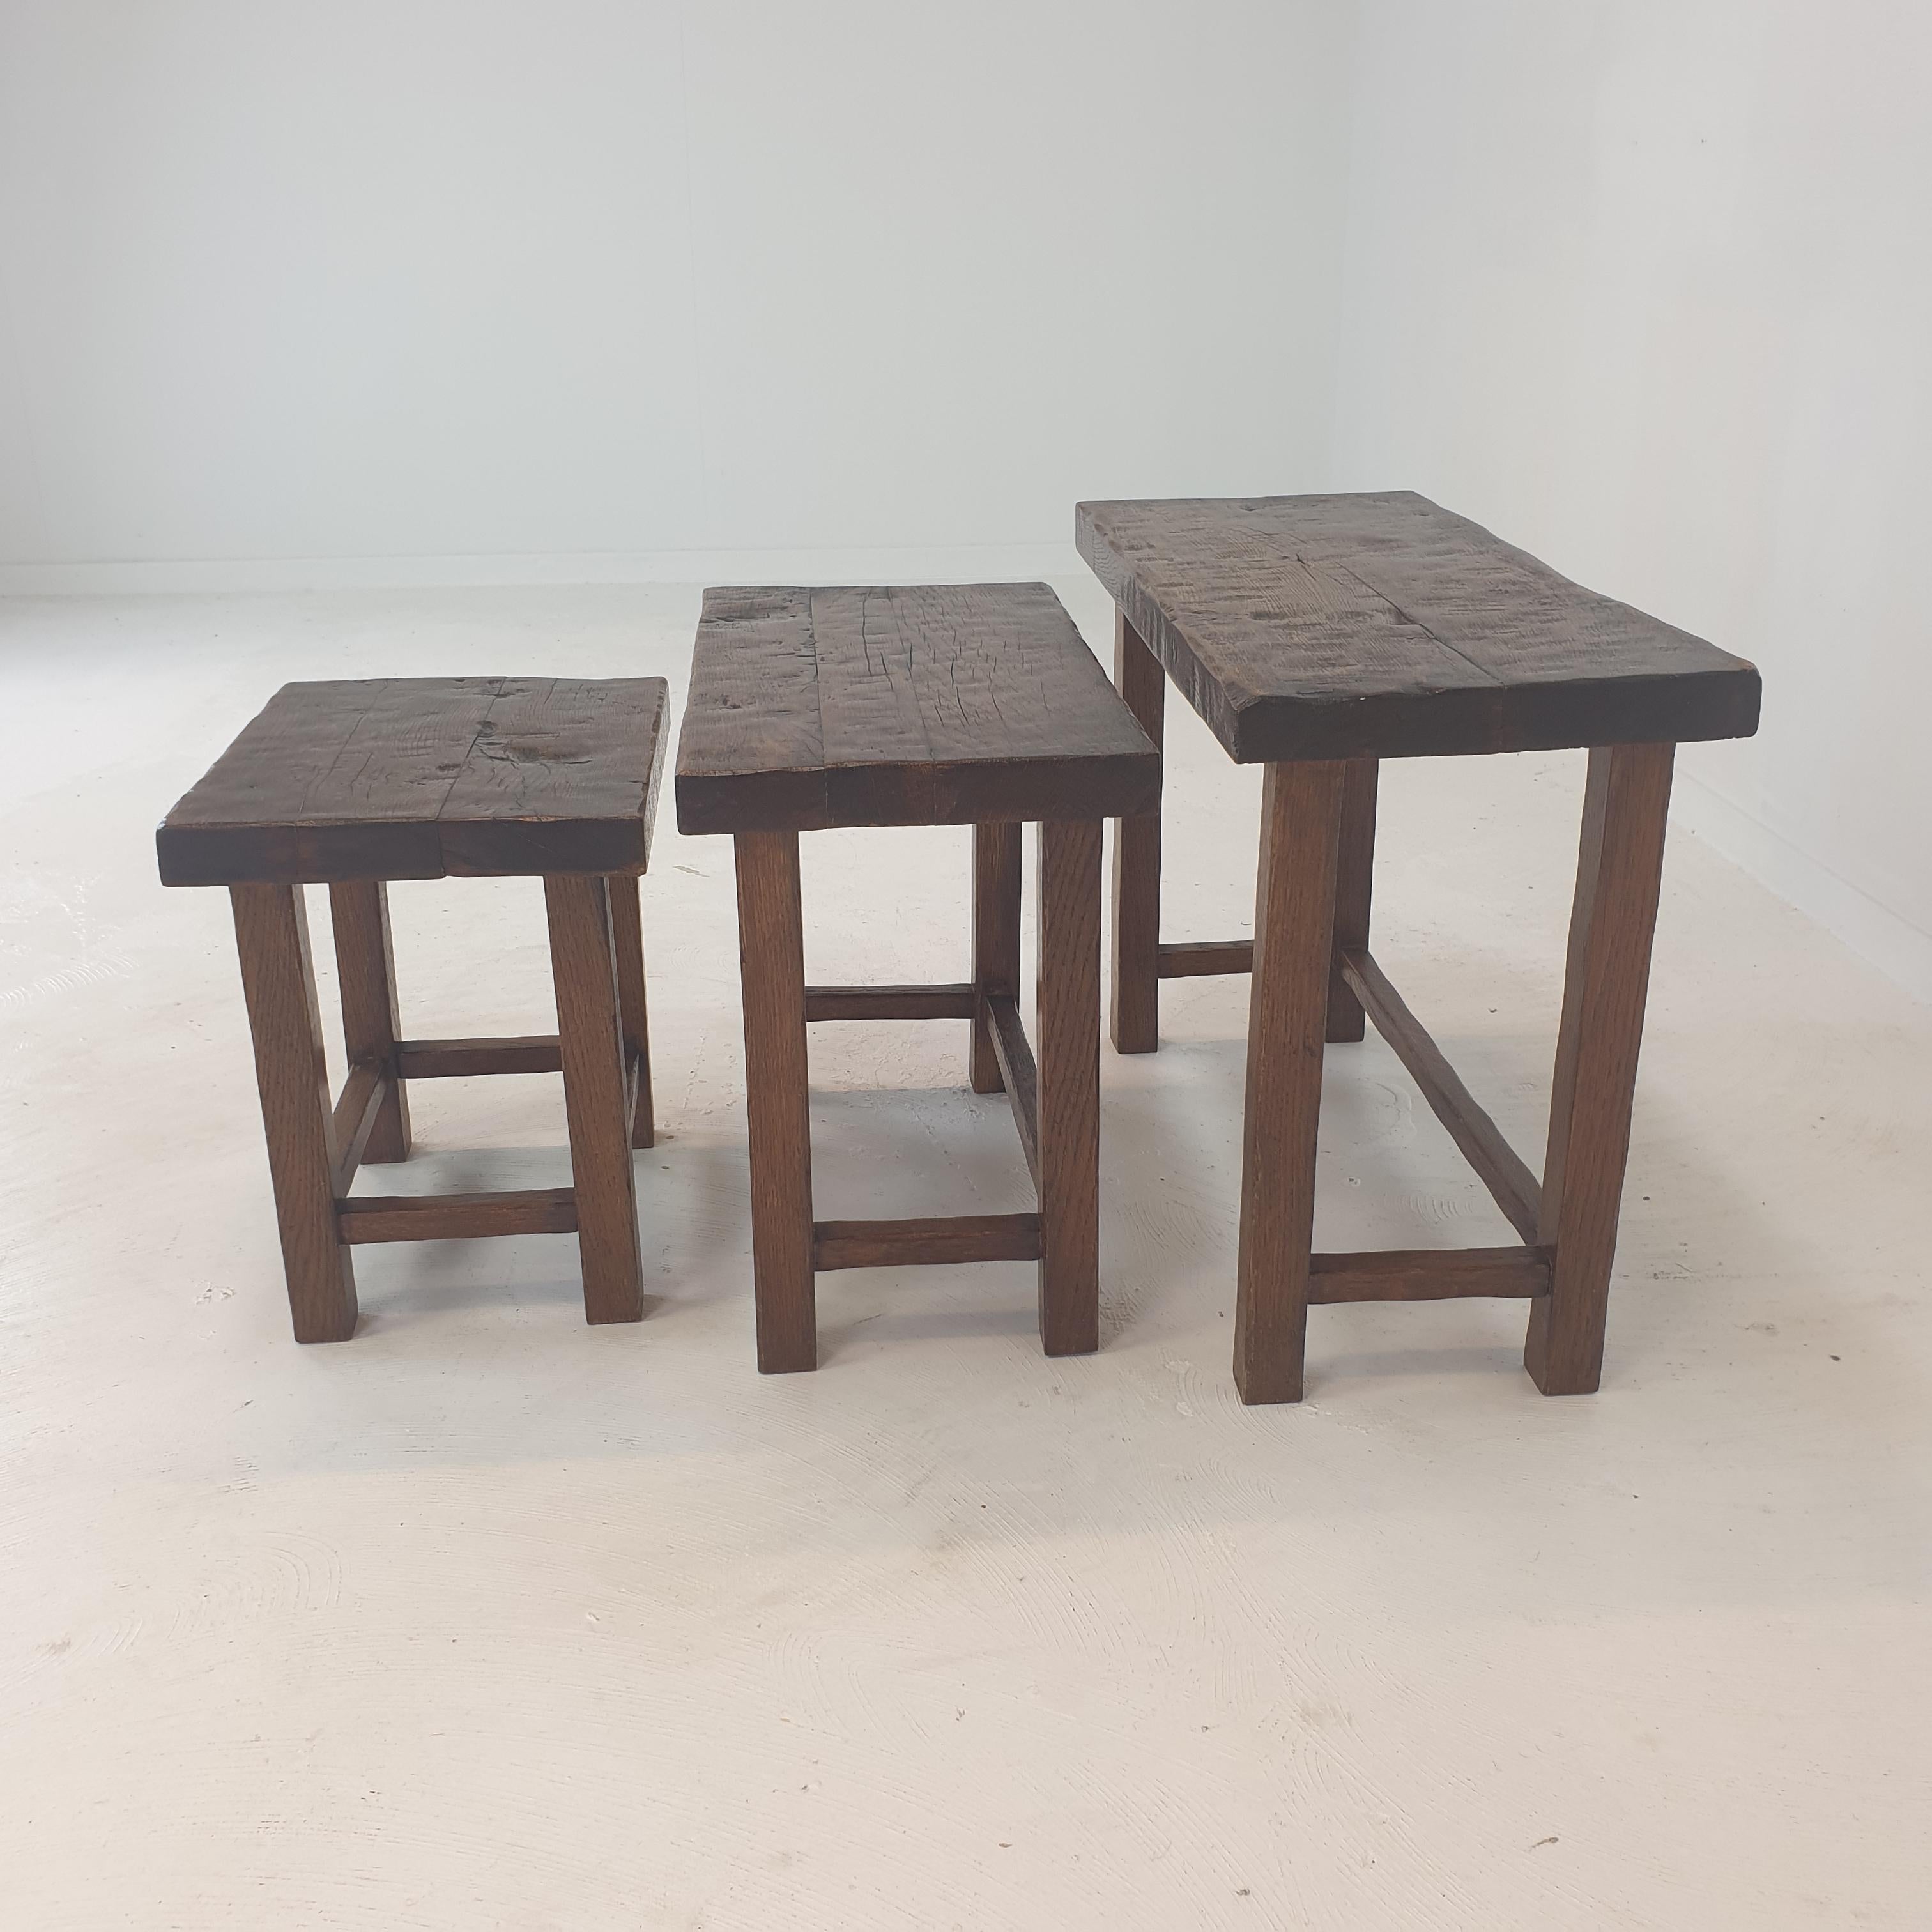 Set of 3 Brutalist Wooden Nesting Tables, Holland 1960s For Sale 5